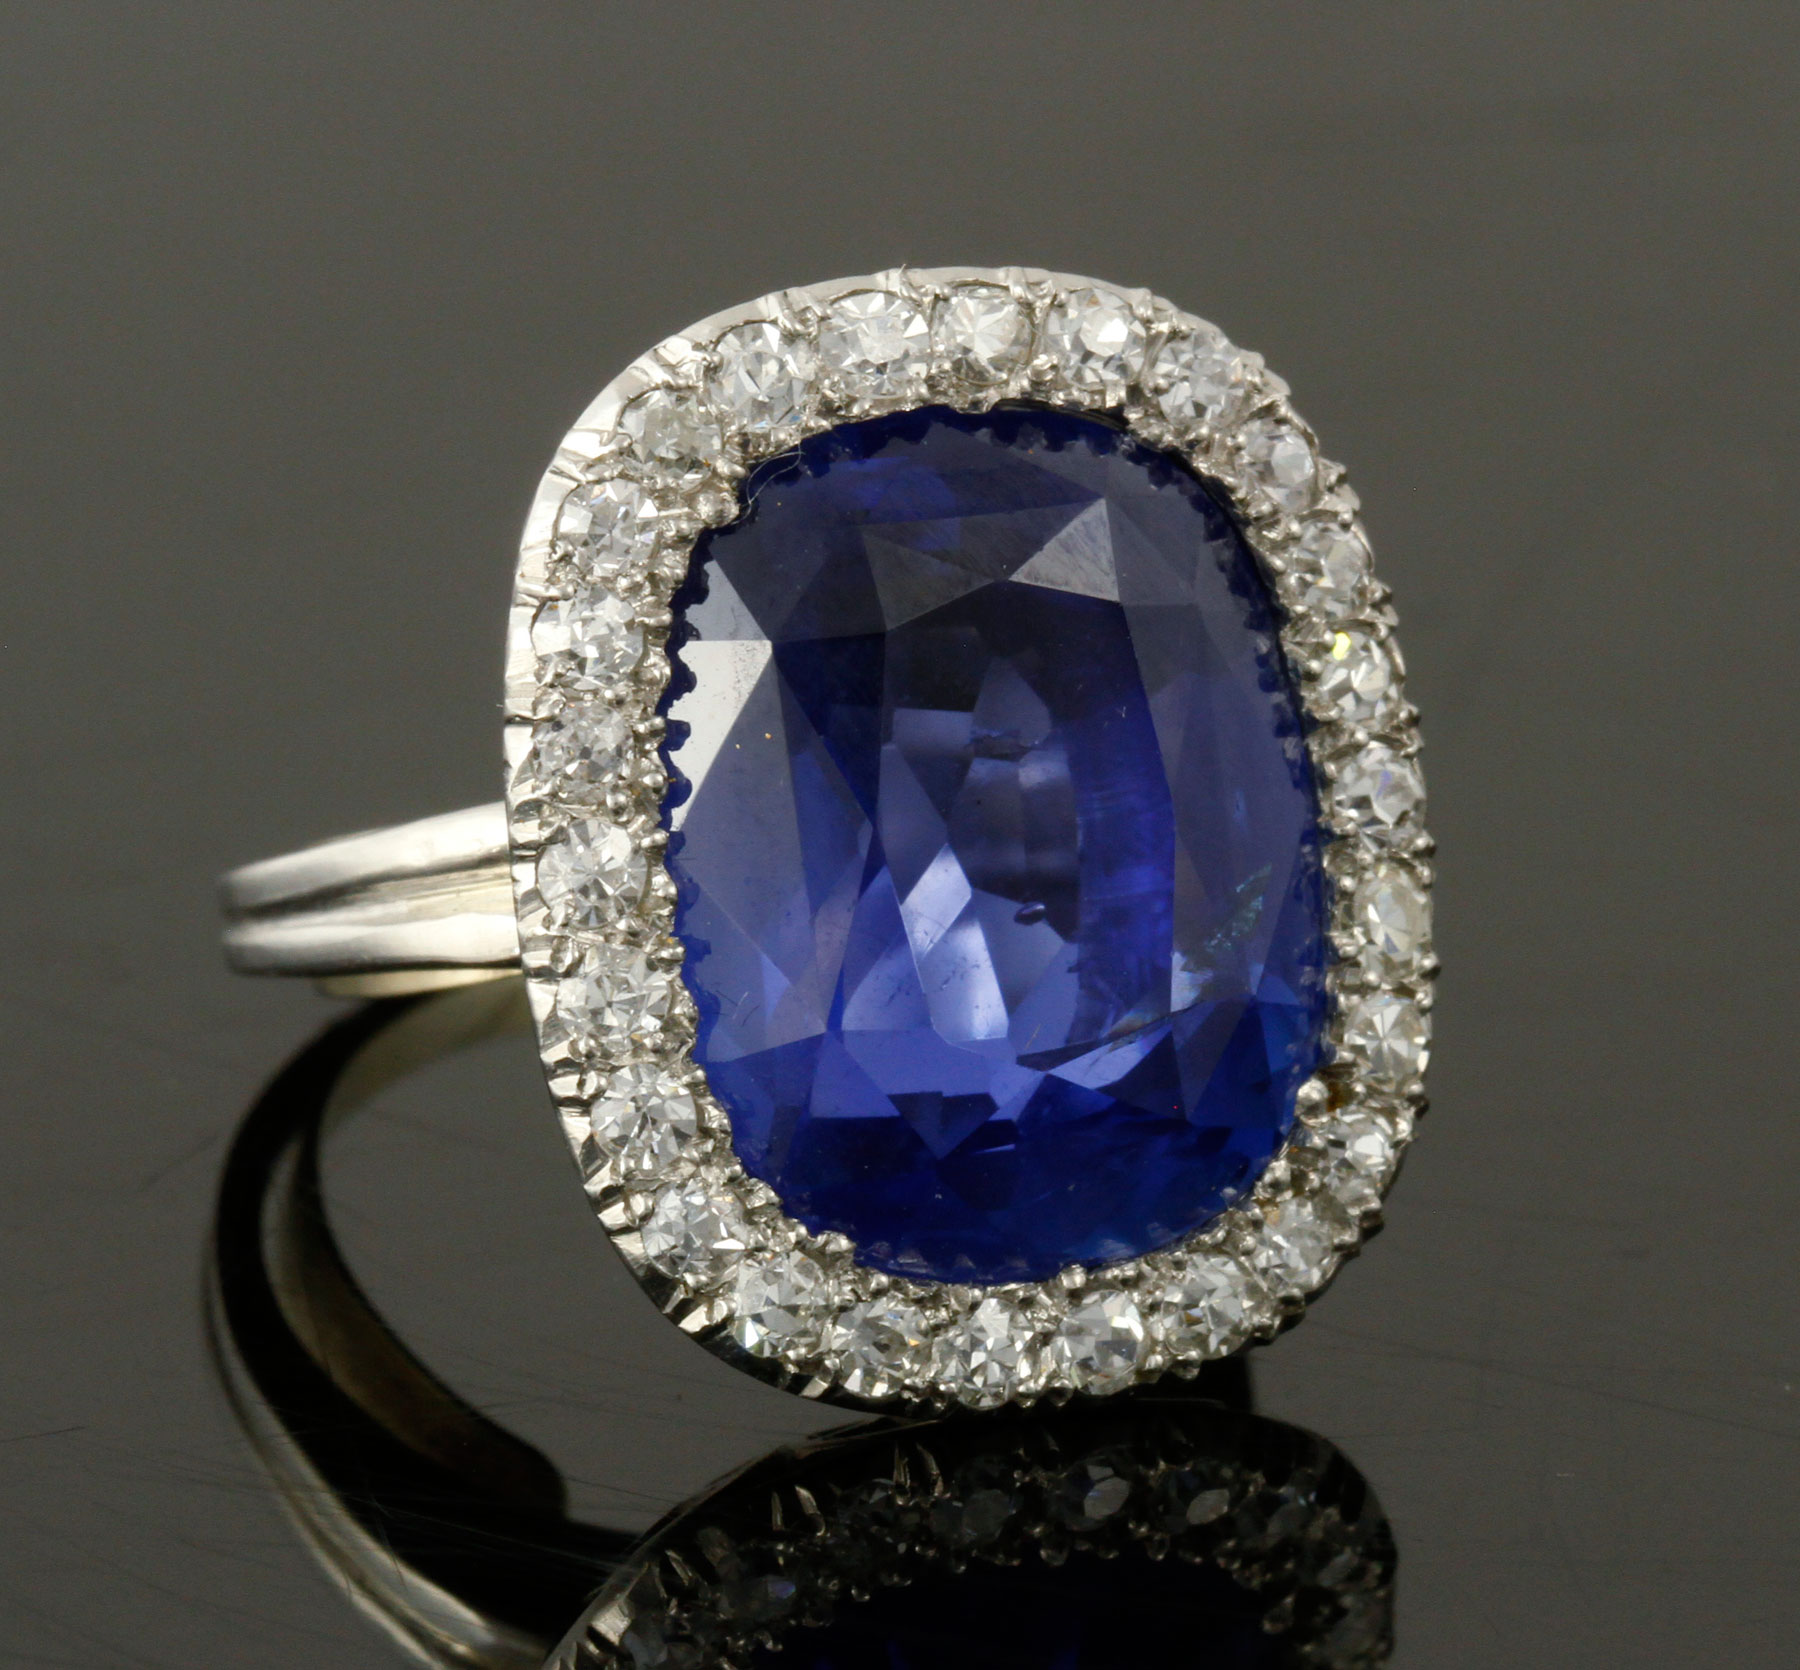 Lot 2273-15.02 carat natural blue Ceylon sapphire ring